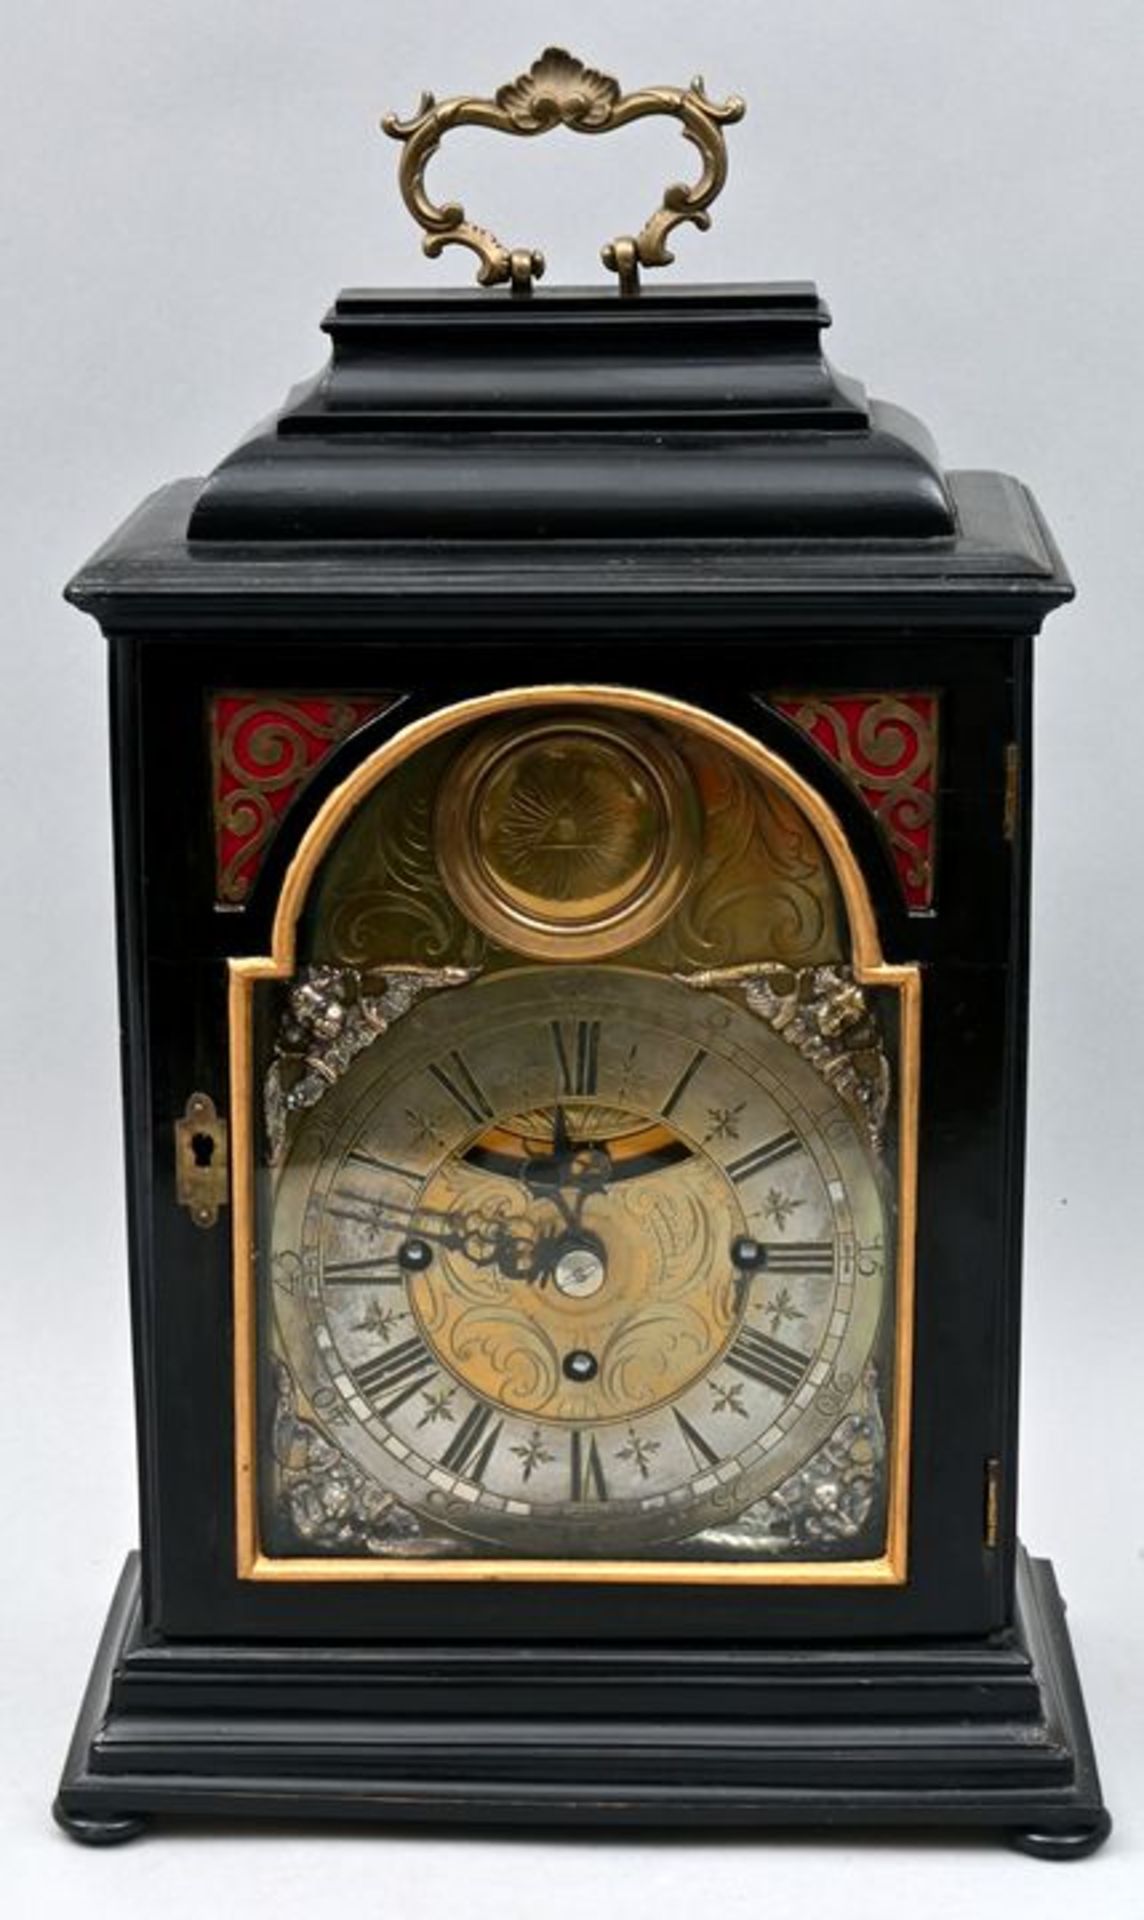 906 Stockuhr, Holz, Freimaurer/ bracket clock